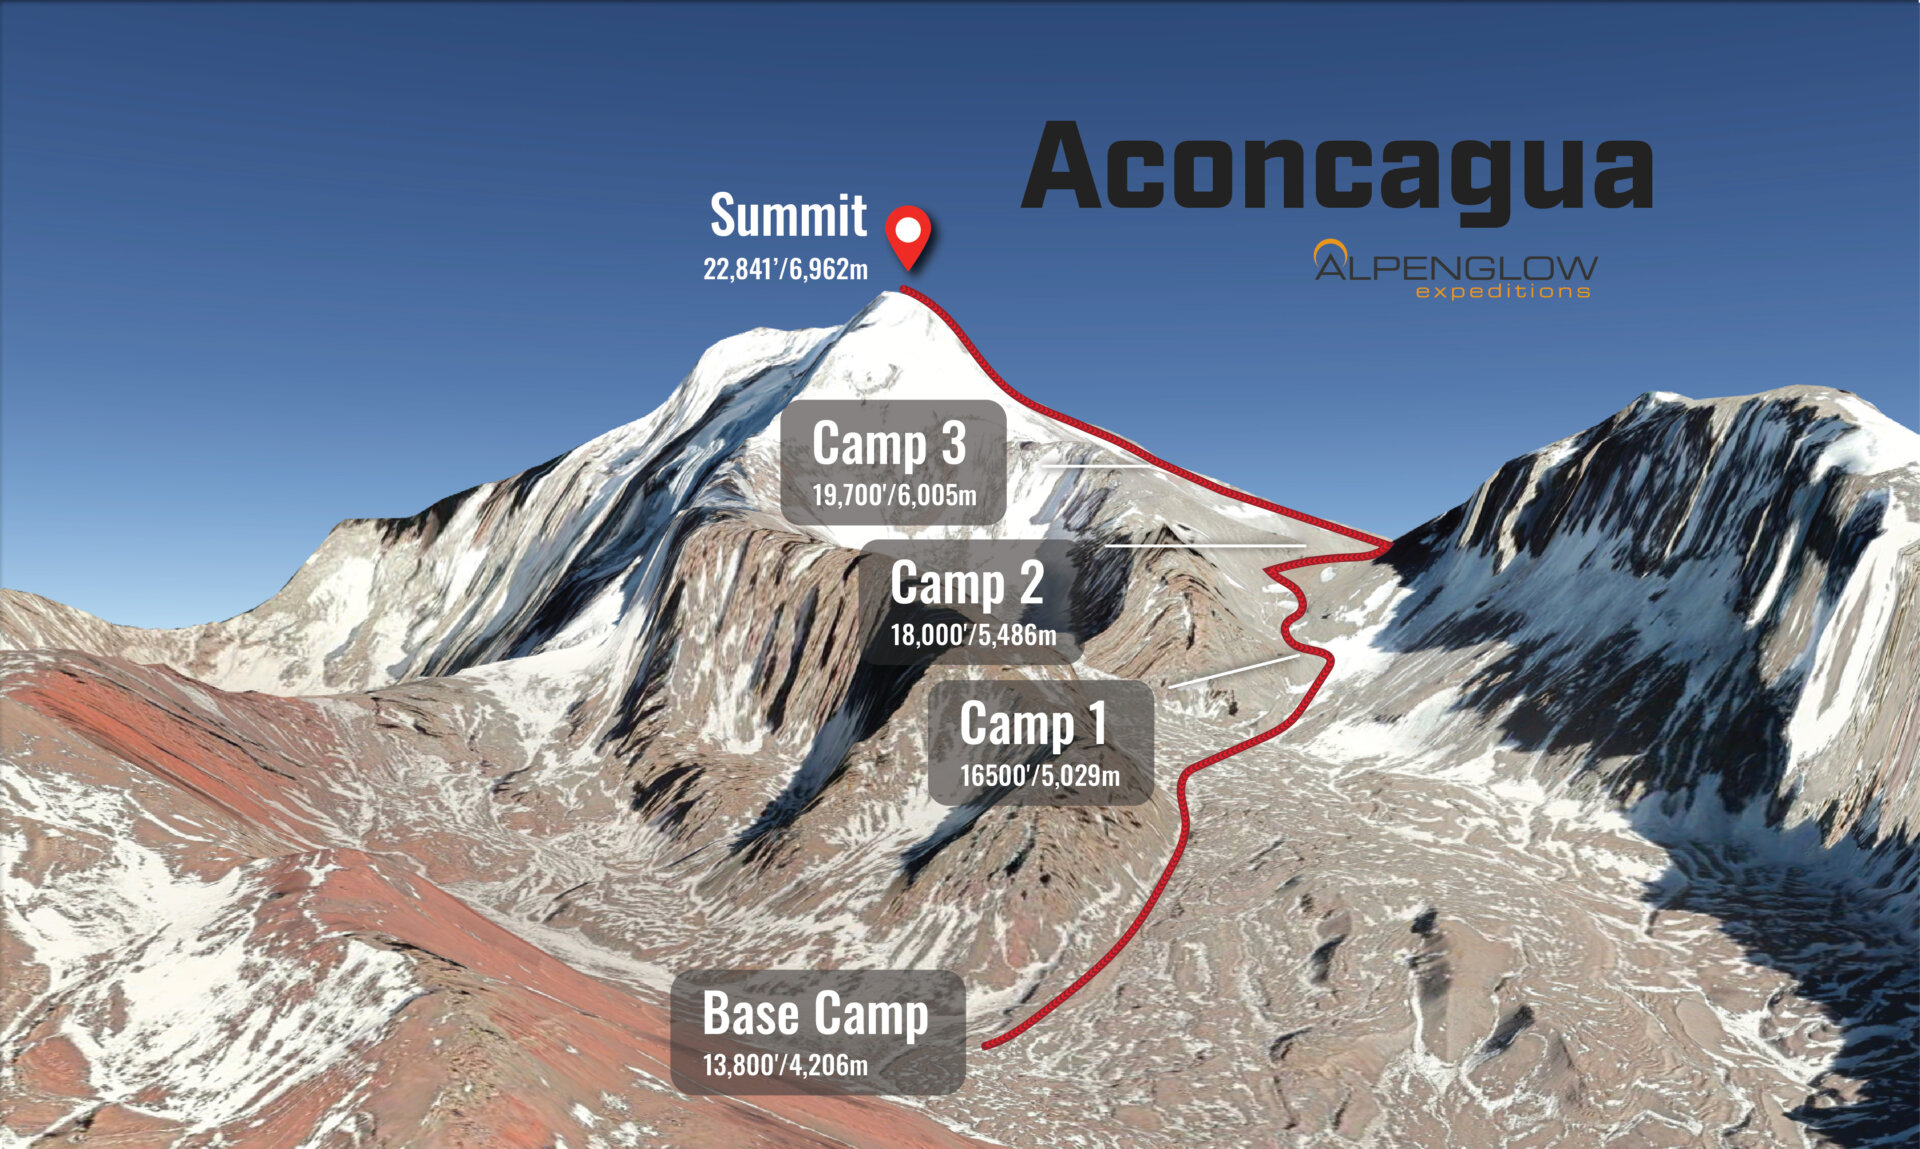 Aconcagua expedition, summit aconcagua, aconcagua base camp, aconcagua map